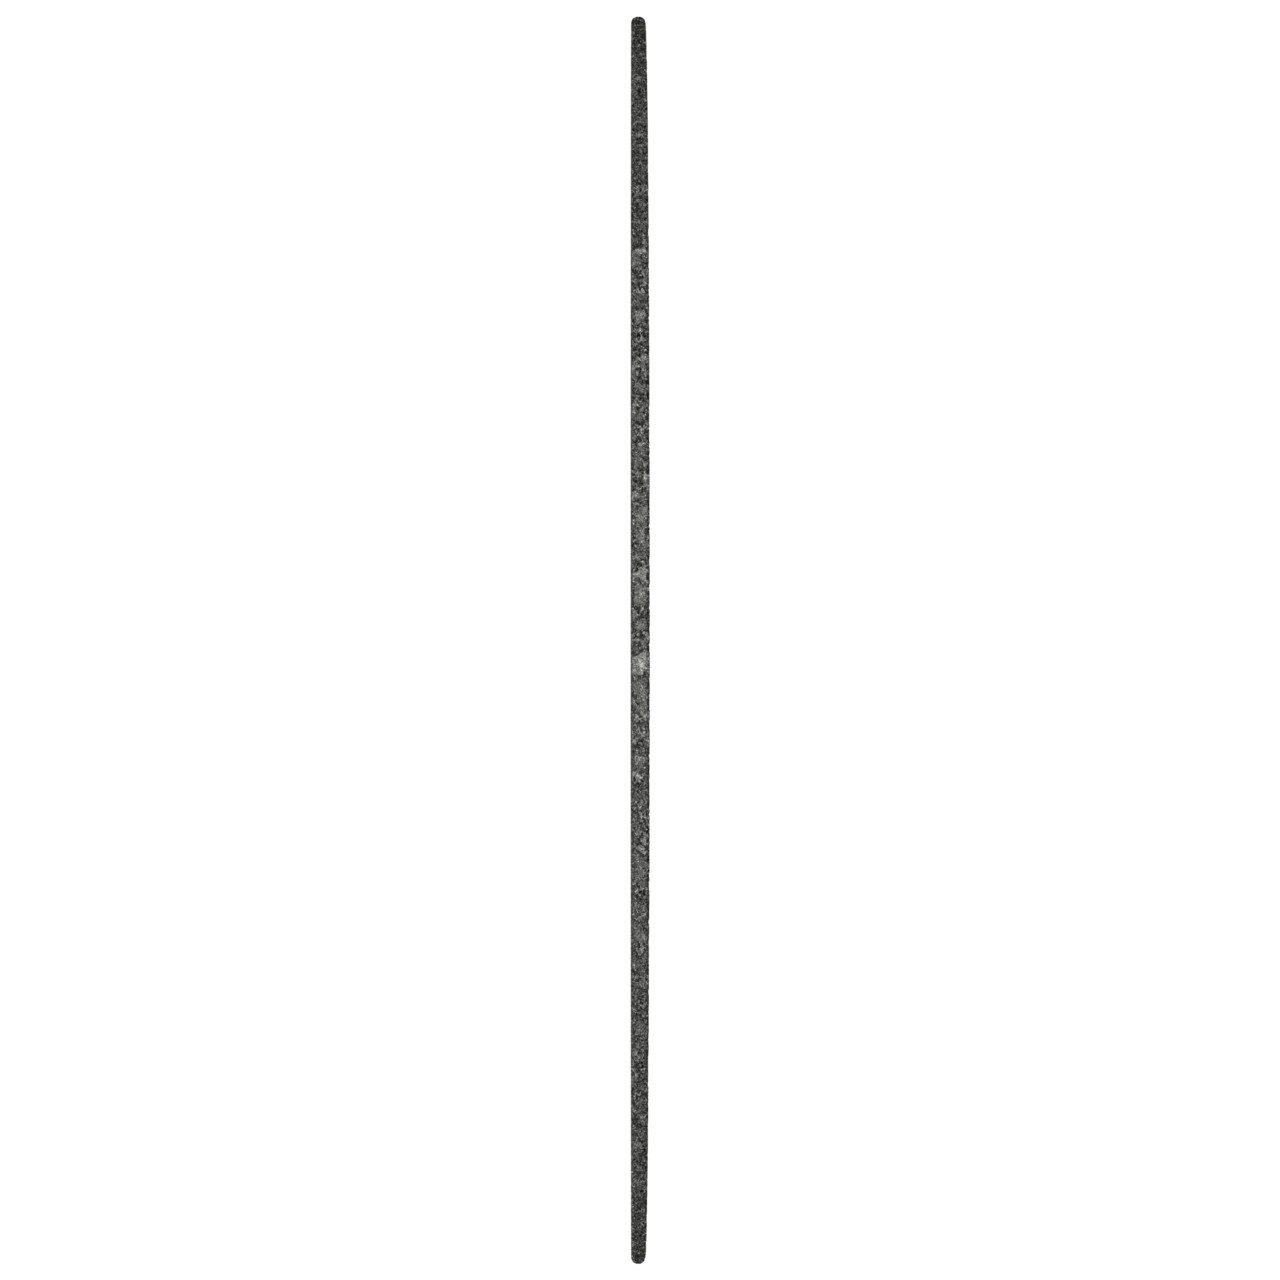 Dischi da taglio Tyrolit DxDxH 63x1x10 Per acciaio inox, forma: 41 - versione diritta, Art. 299269